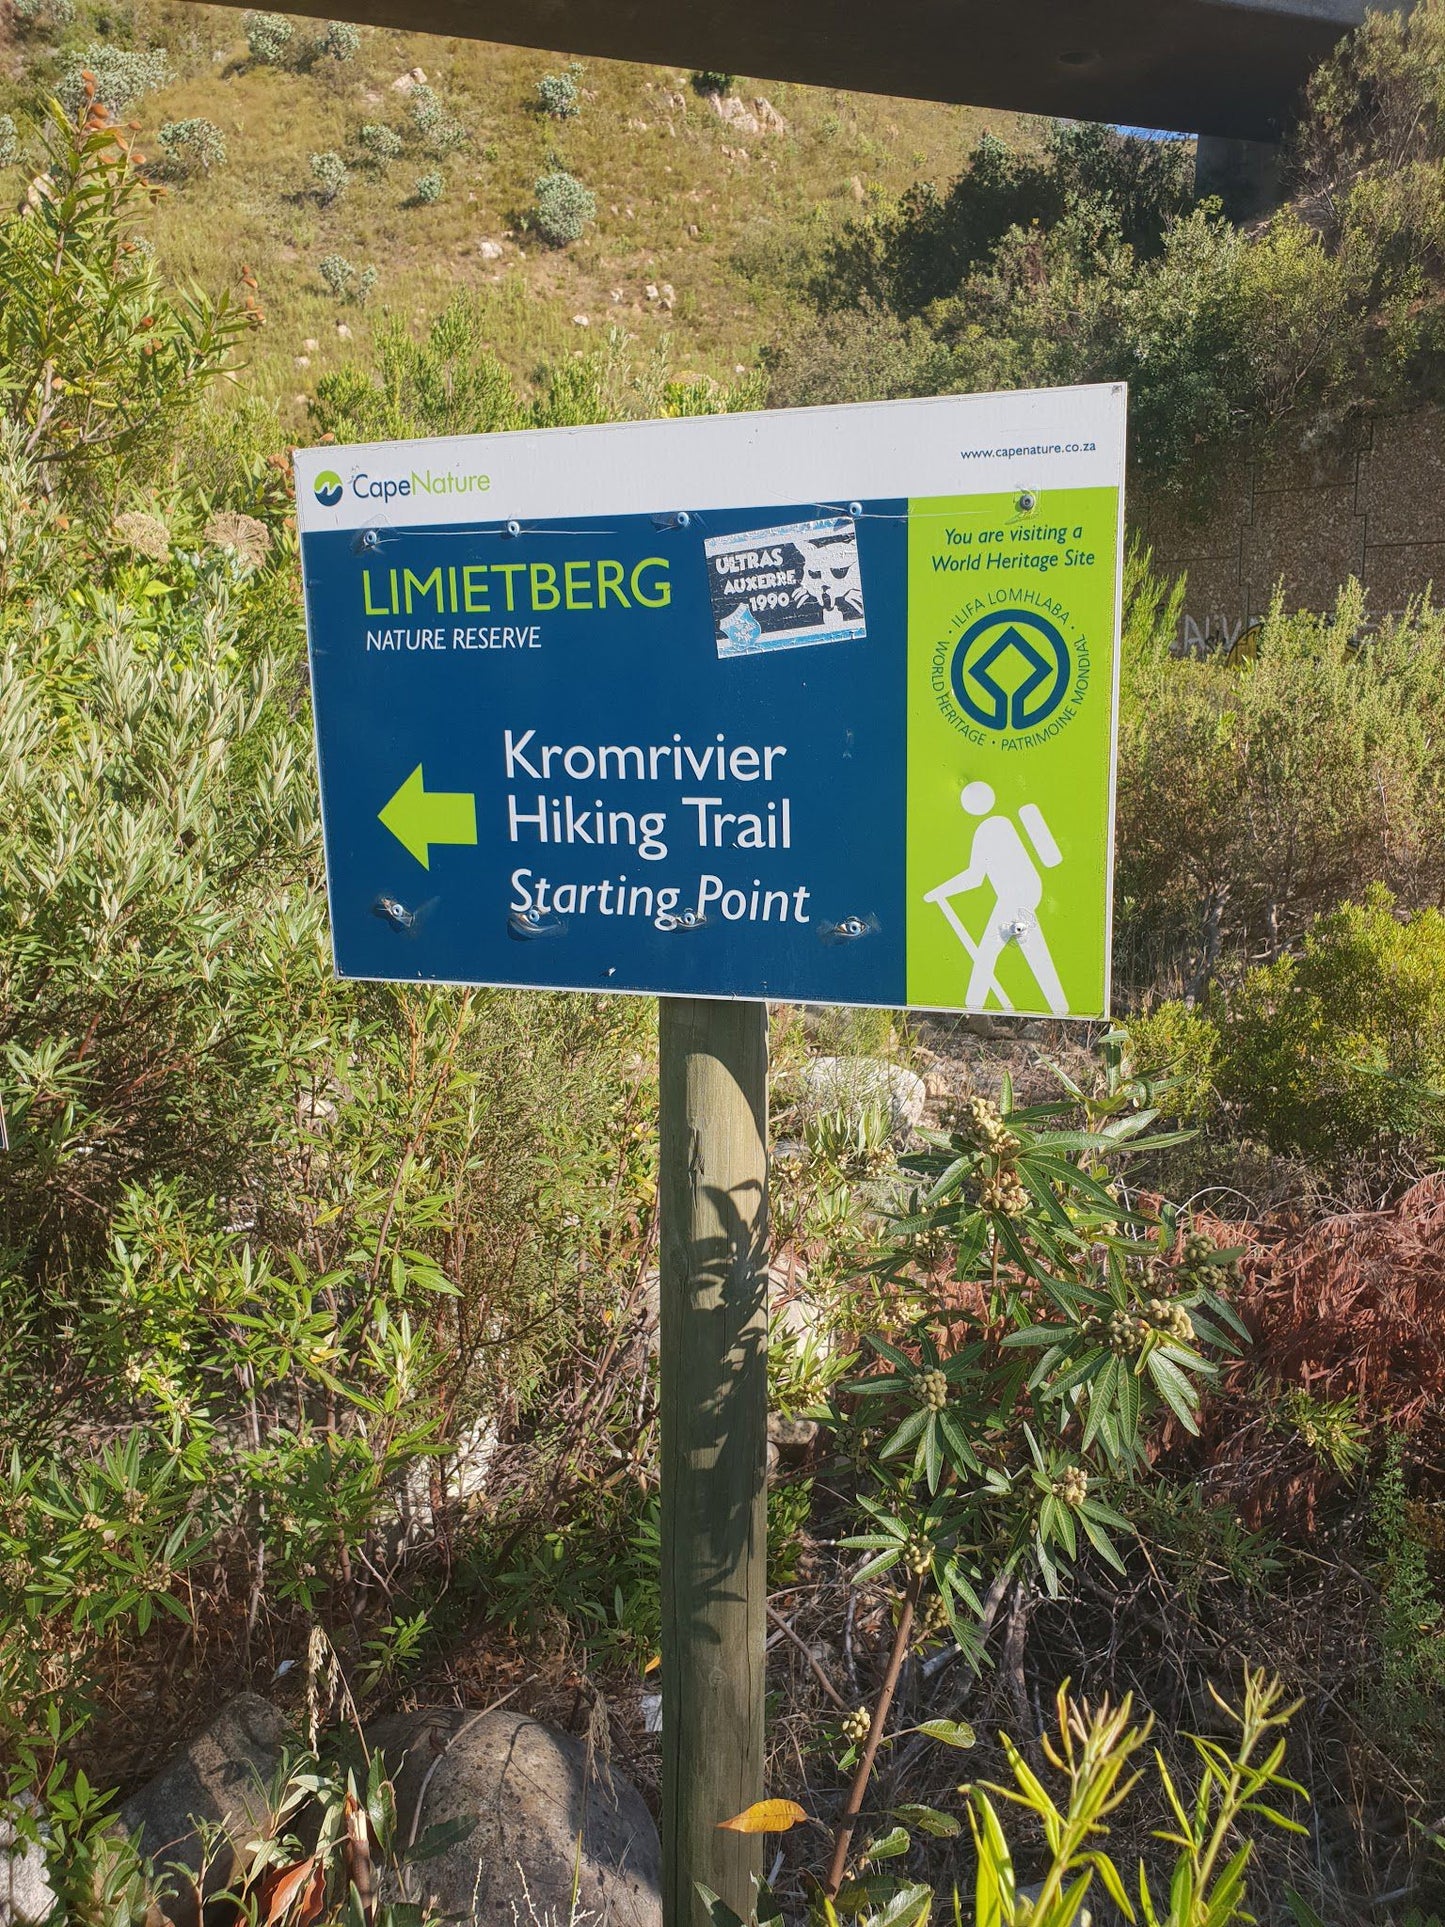  Limietberg Nature Reserve